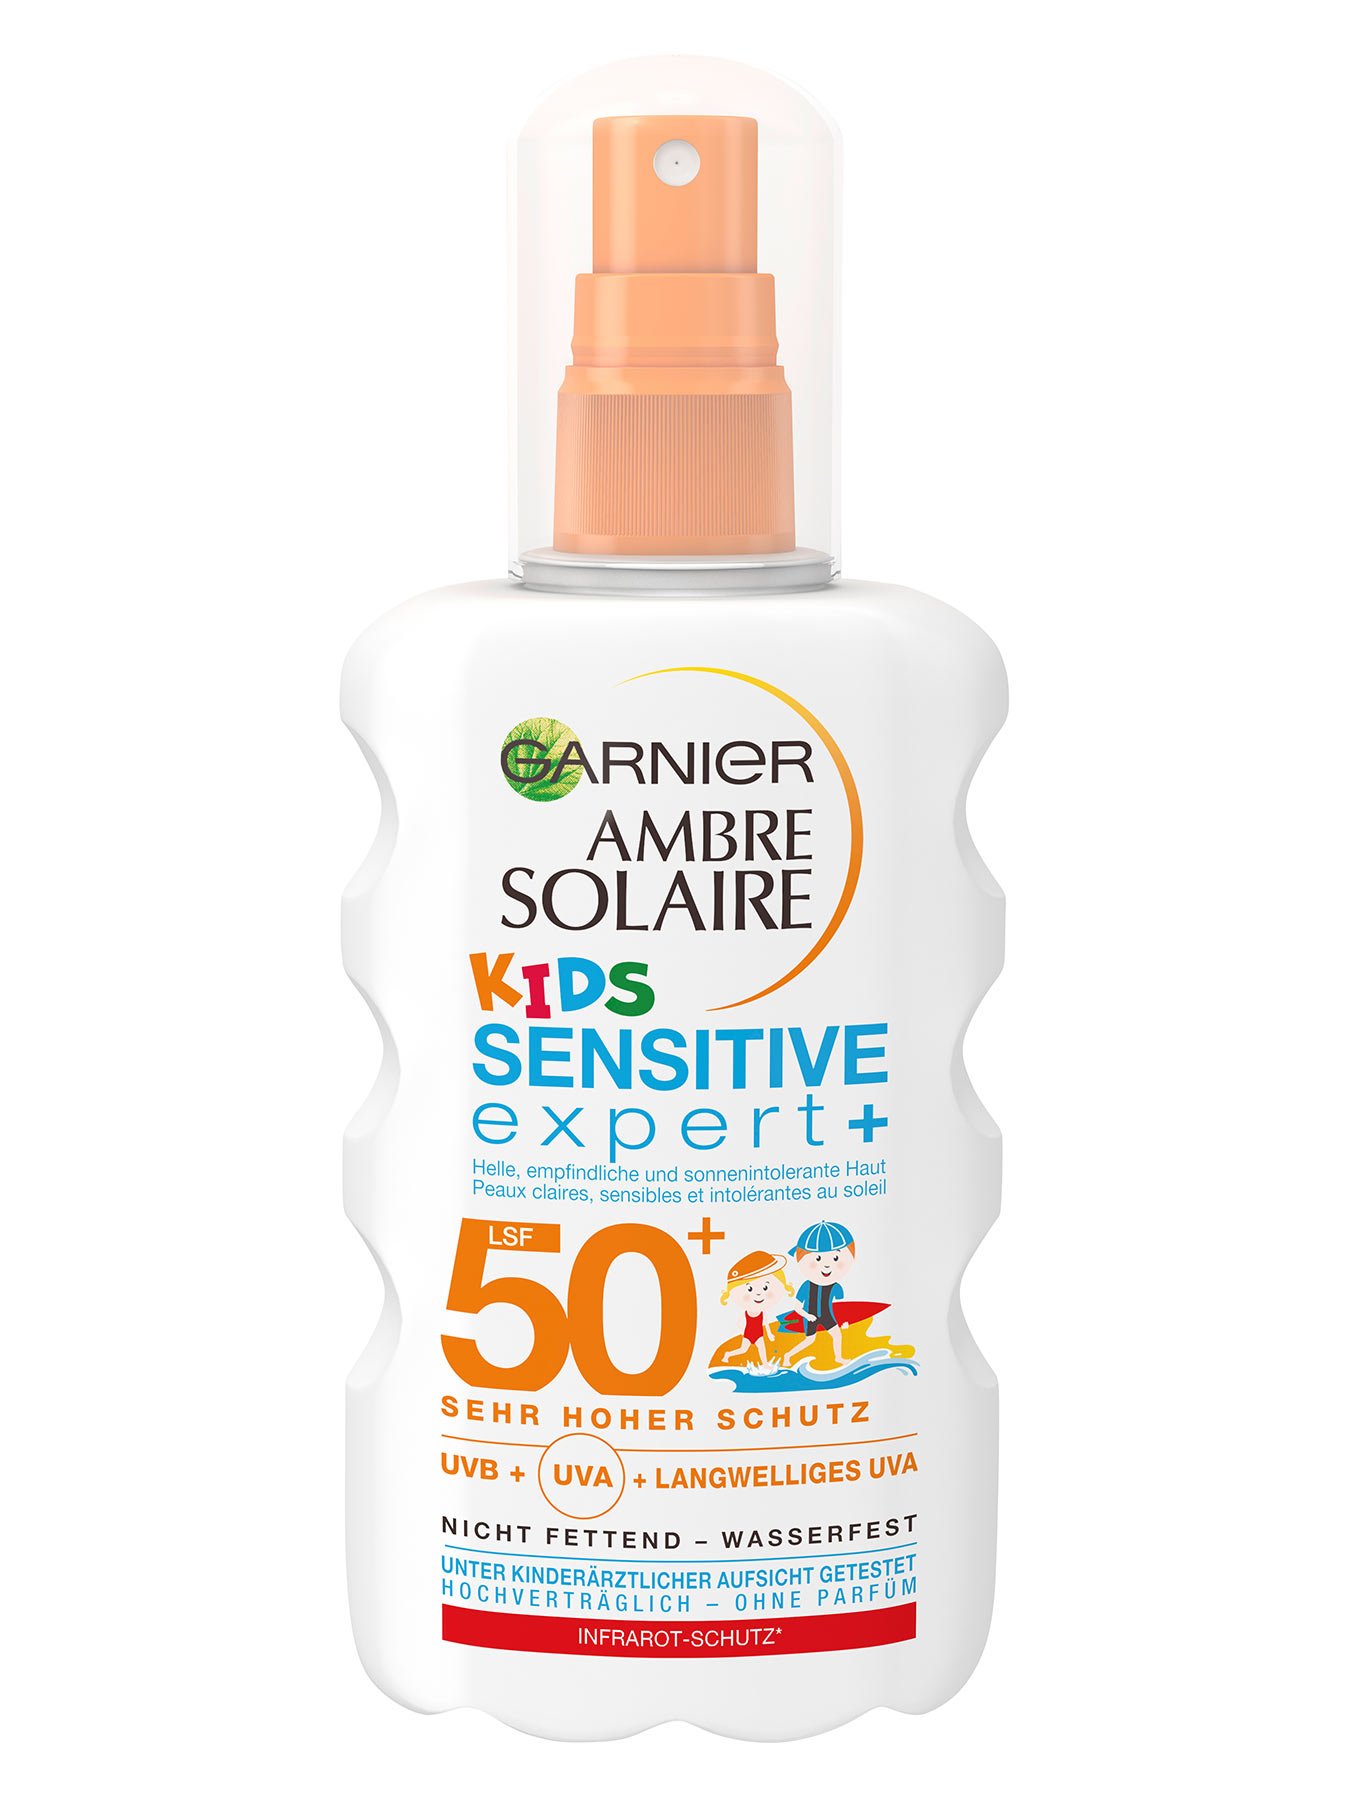 Garnier 50+ Spray expert+ Sensitive | Kids FPS